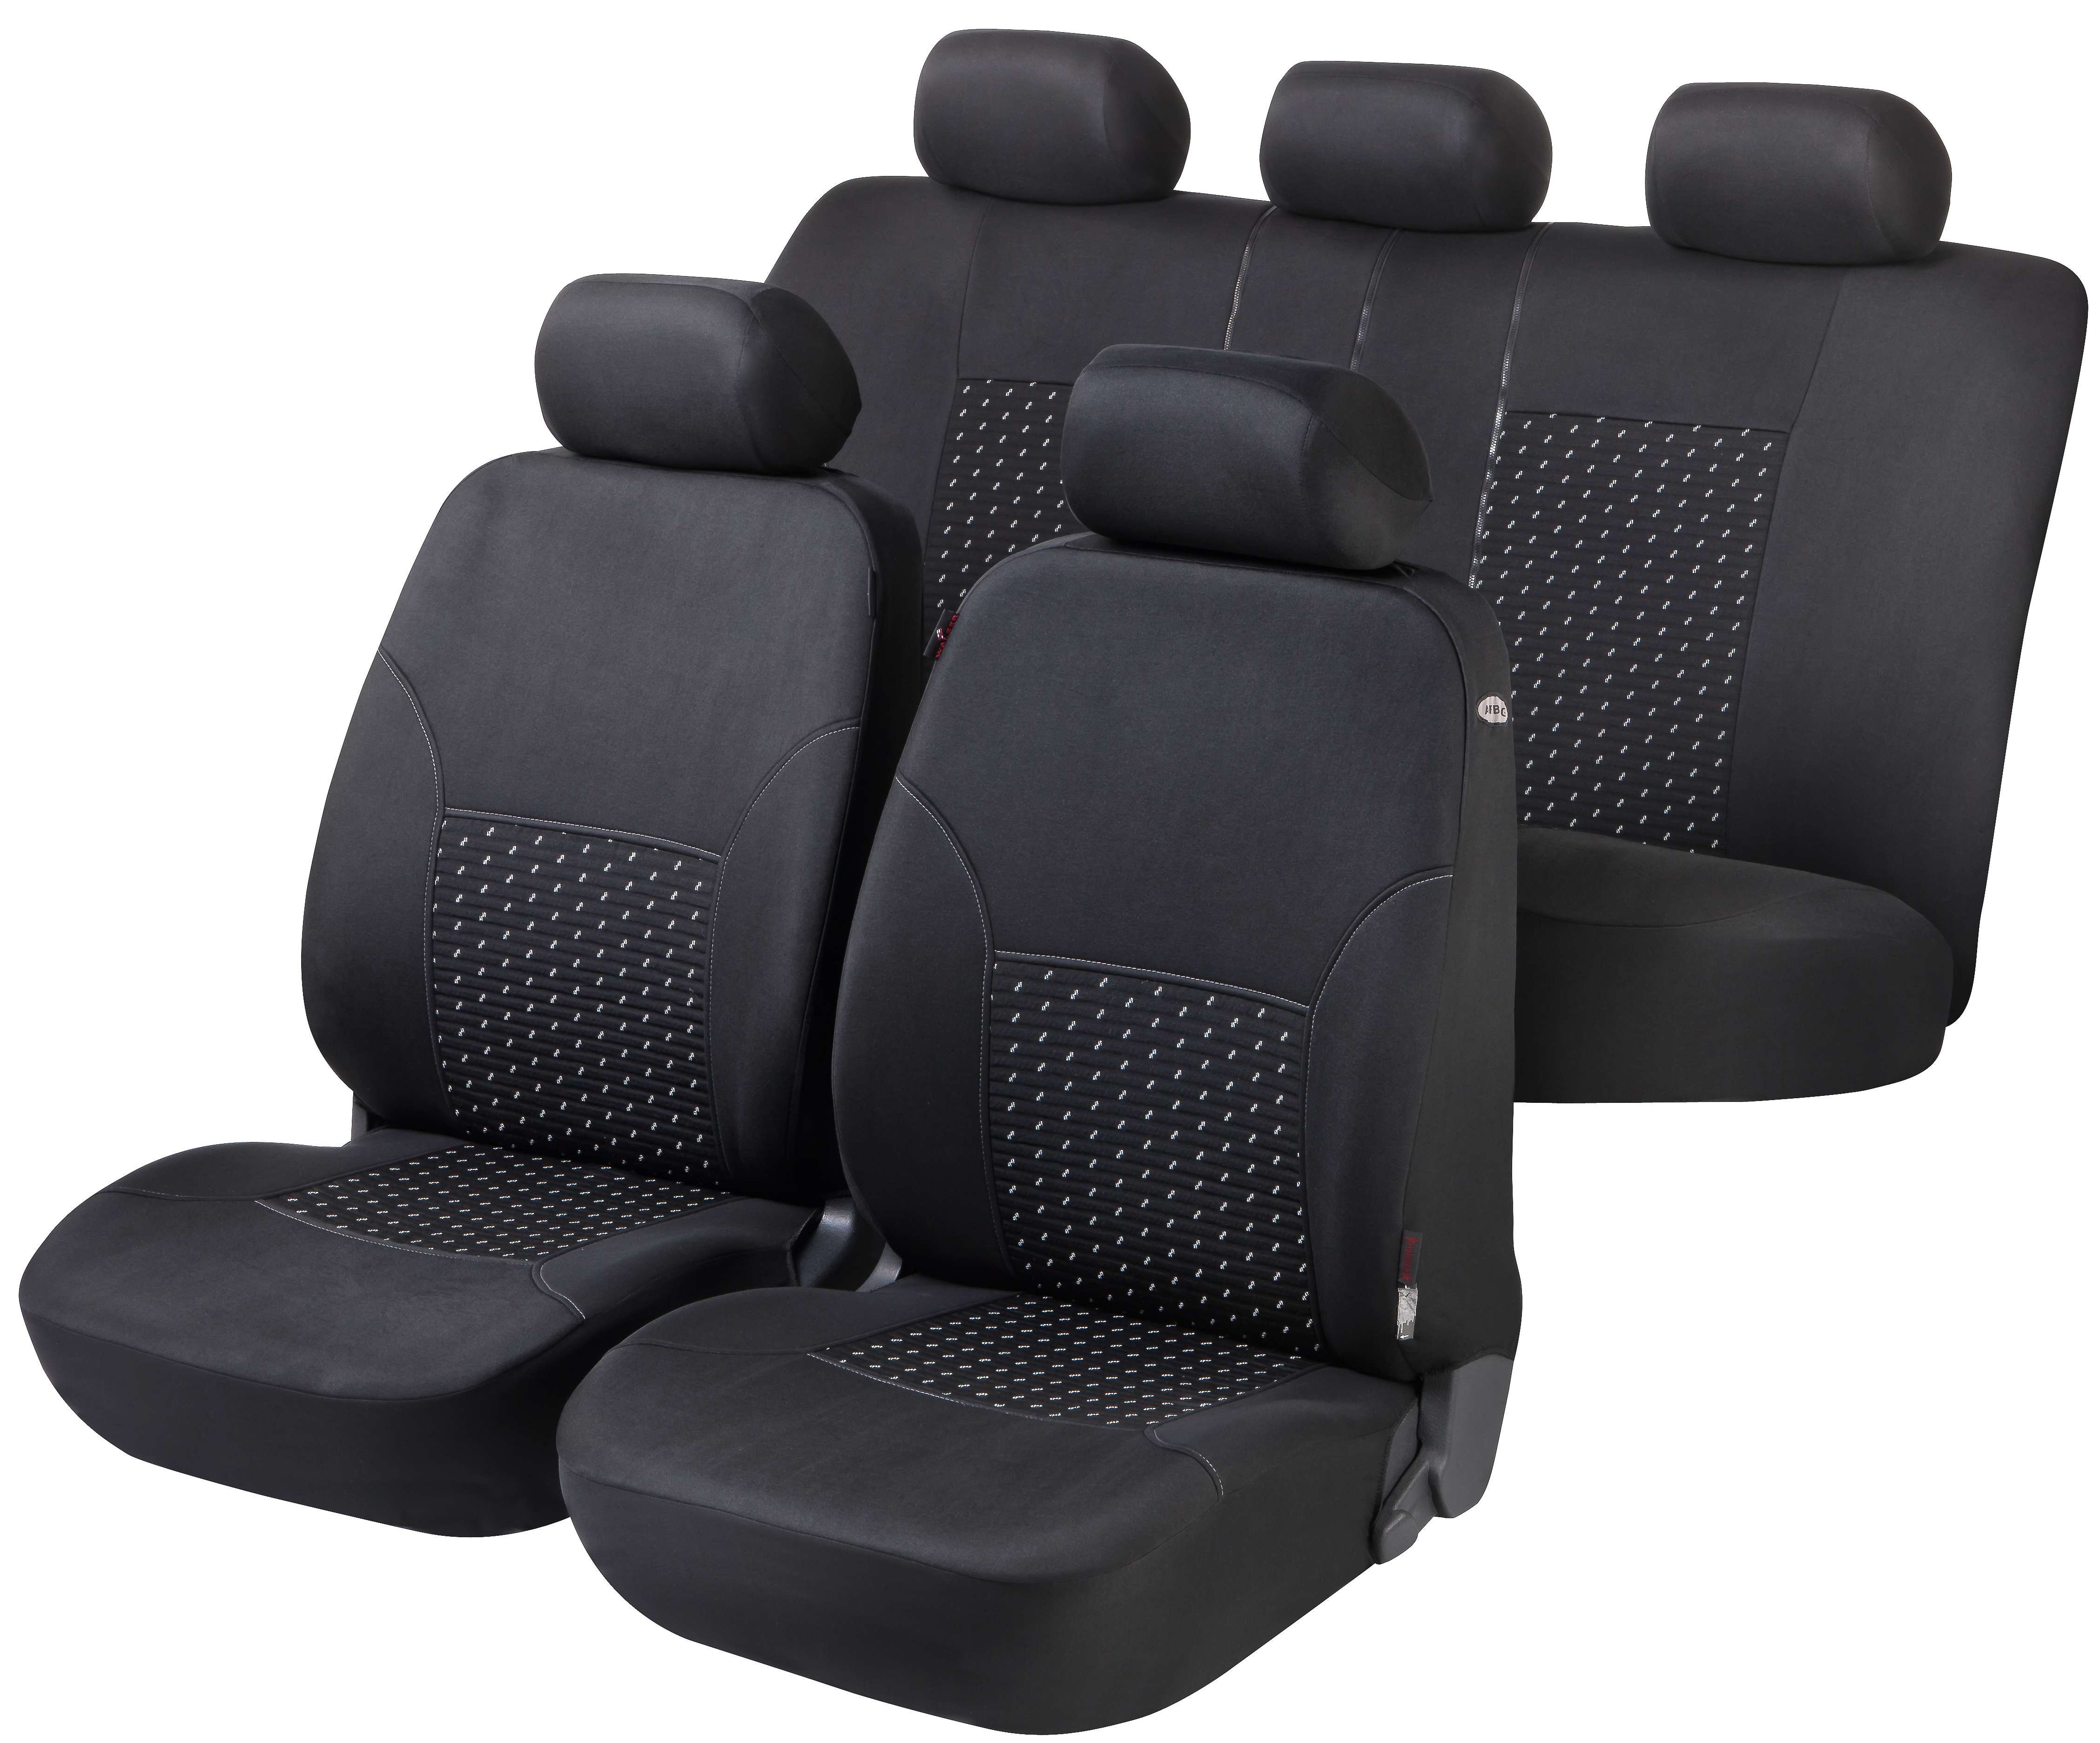 Car Seat Cover Premium DotSpot grey/black